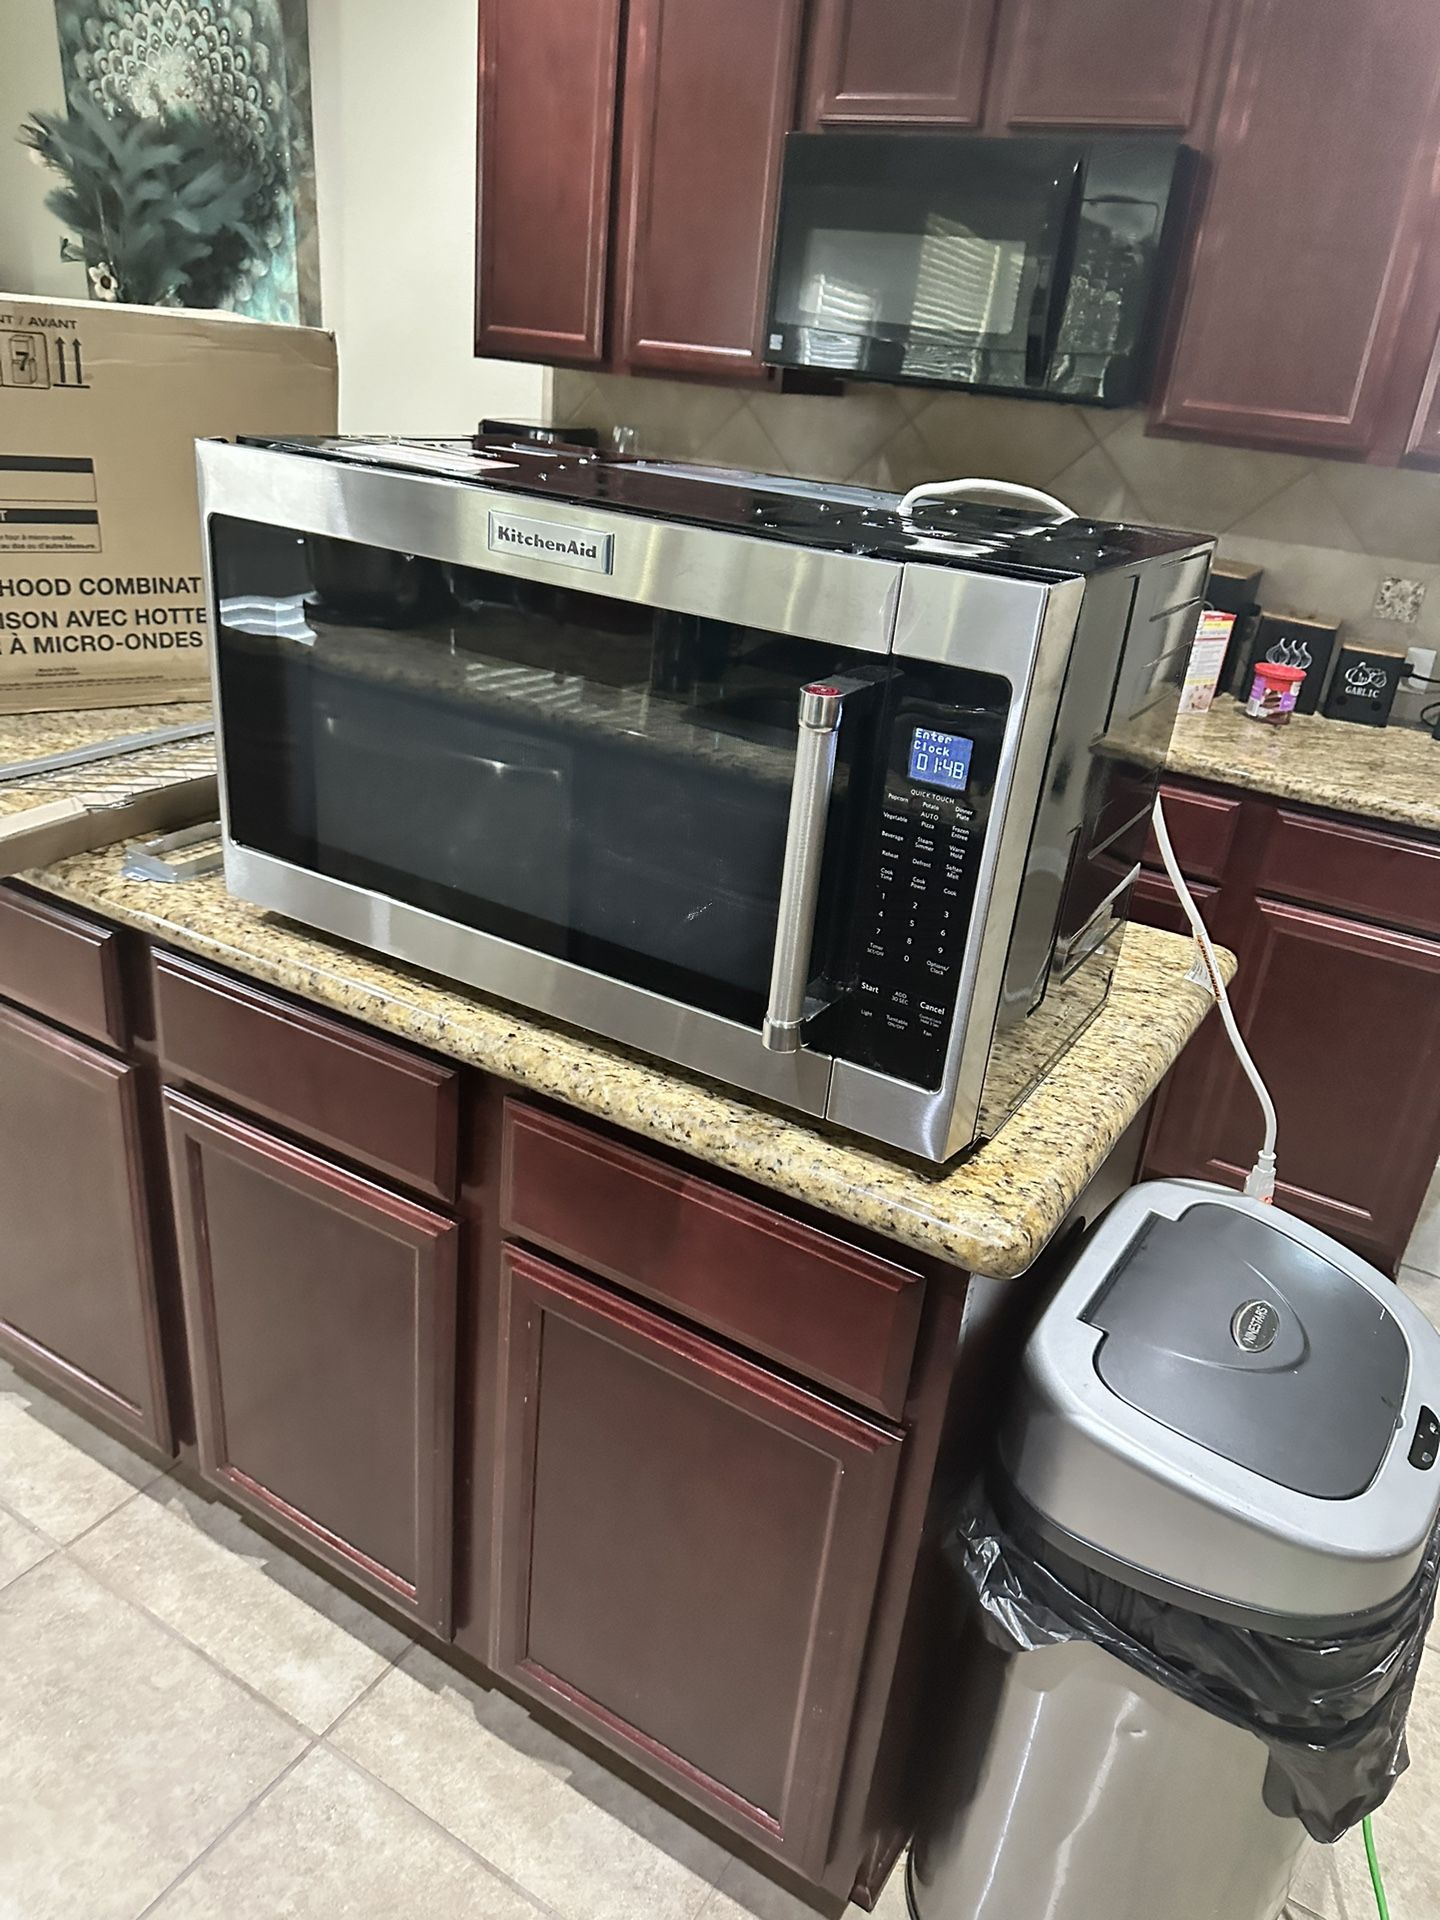 ($648 Retail) New KitchenAid 2.0 cu. ft. Over the Range Sensing Microwave